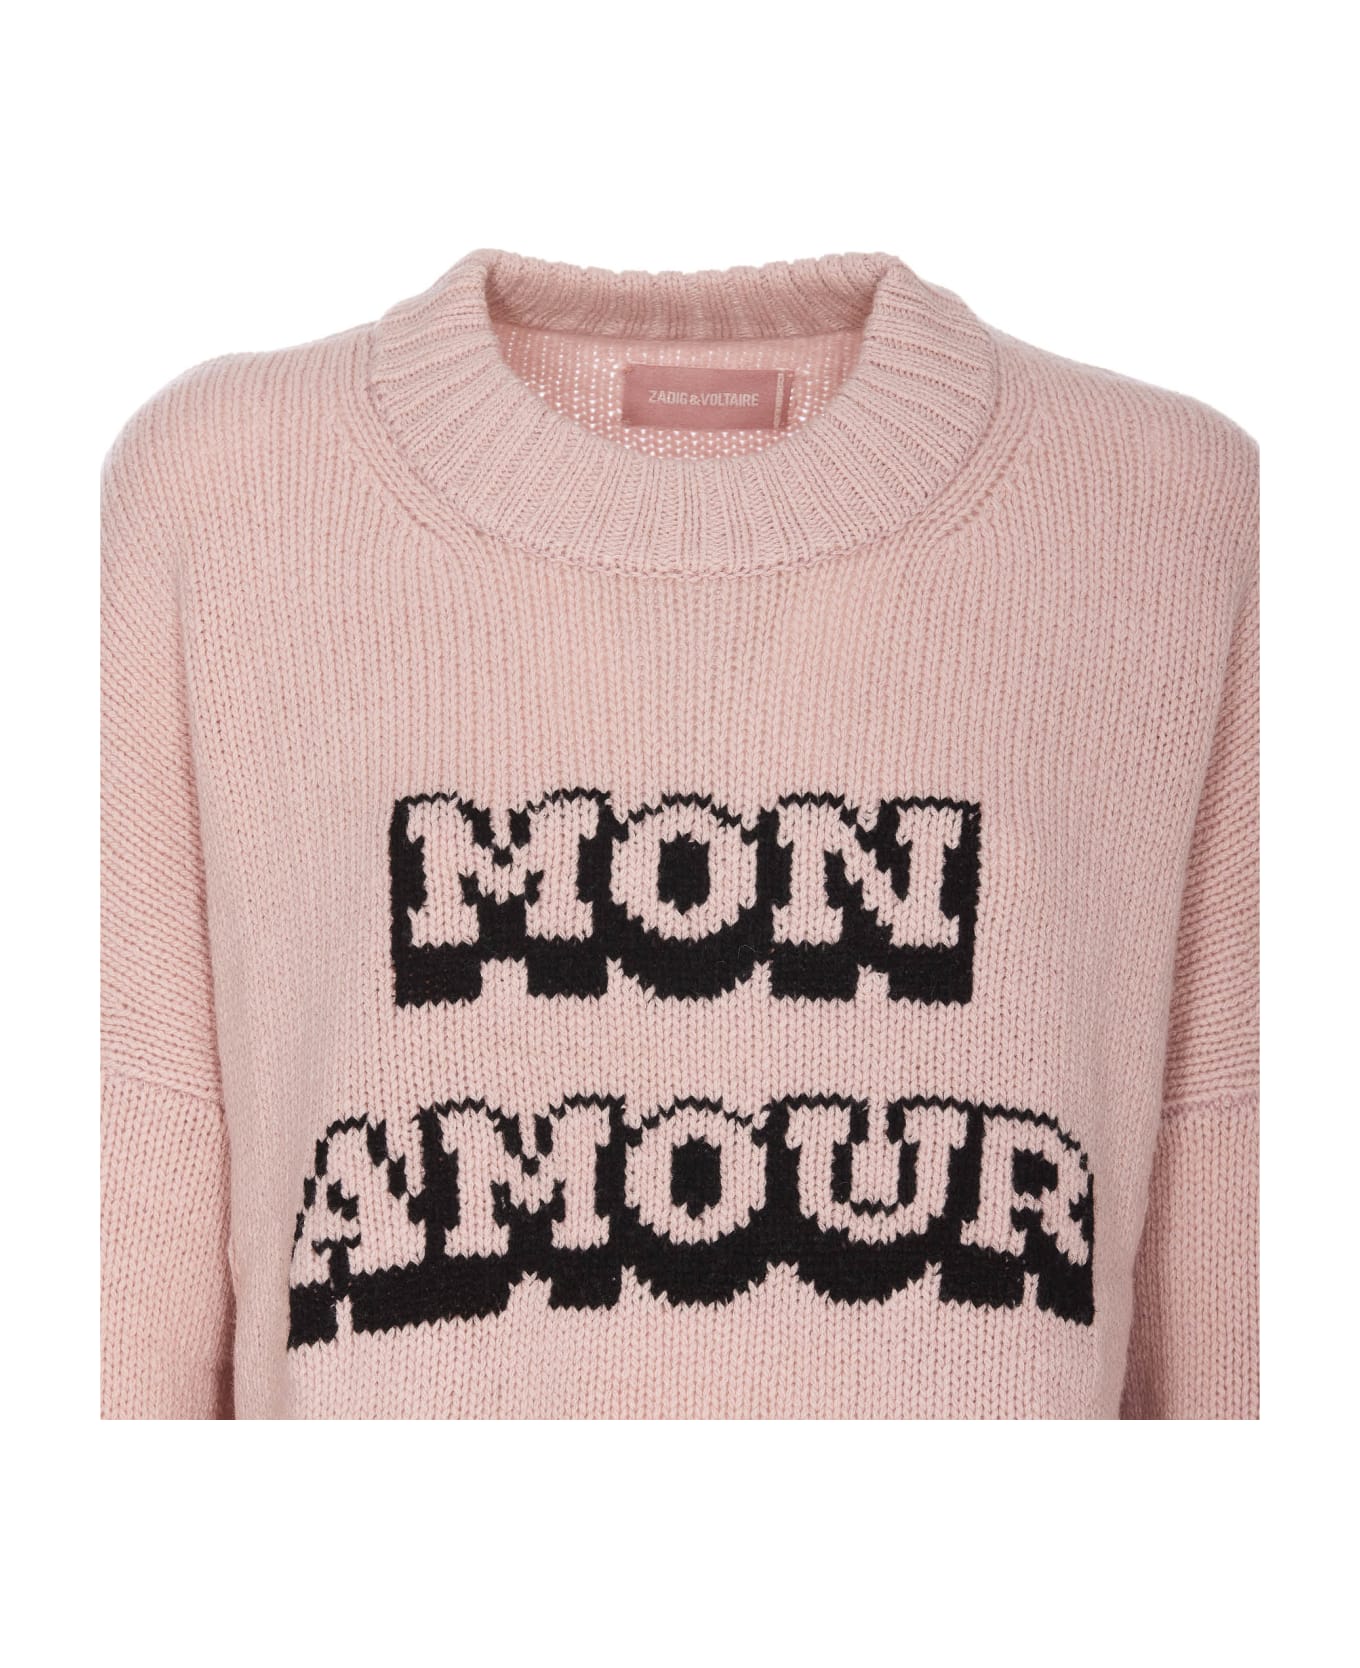 Zadig & Voltaire Malta Mon Amour Sweater - Pink ニットウェア